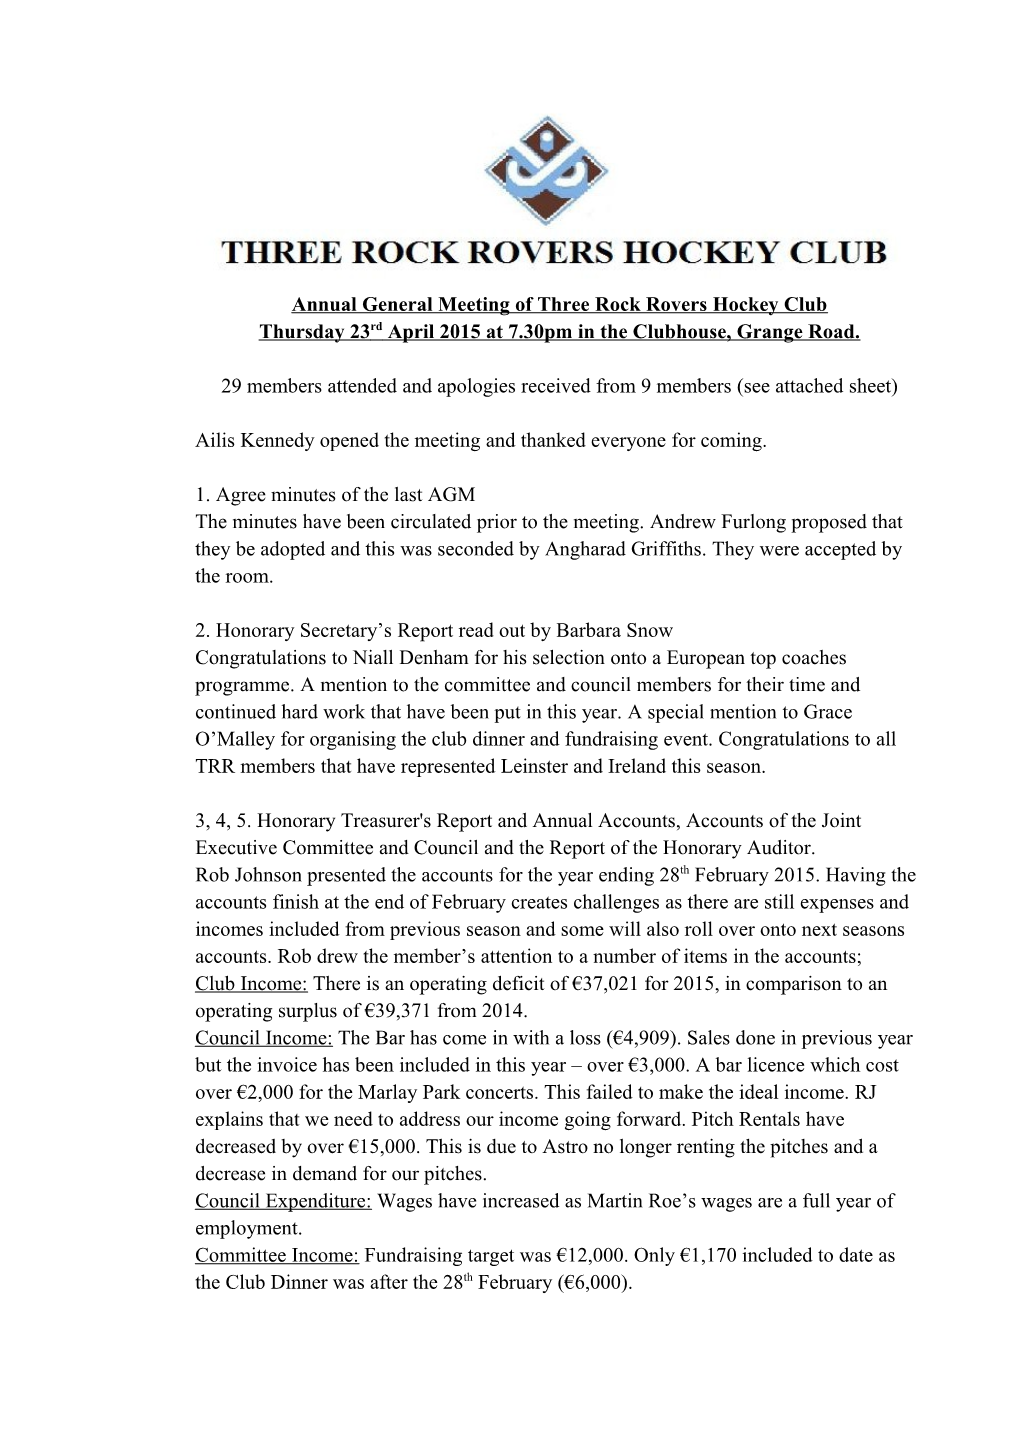 Annual General Meeting of Three Rock Rovers Hockey Club